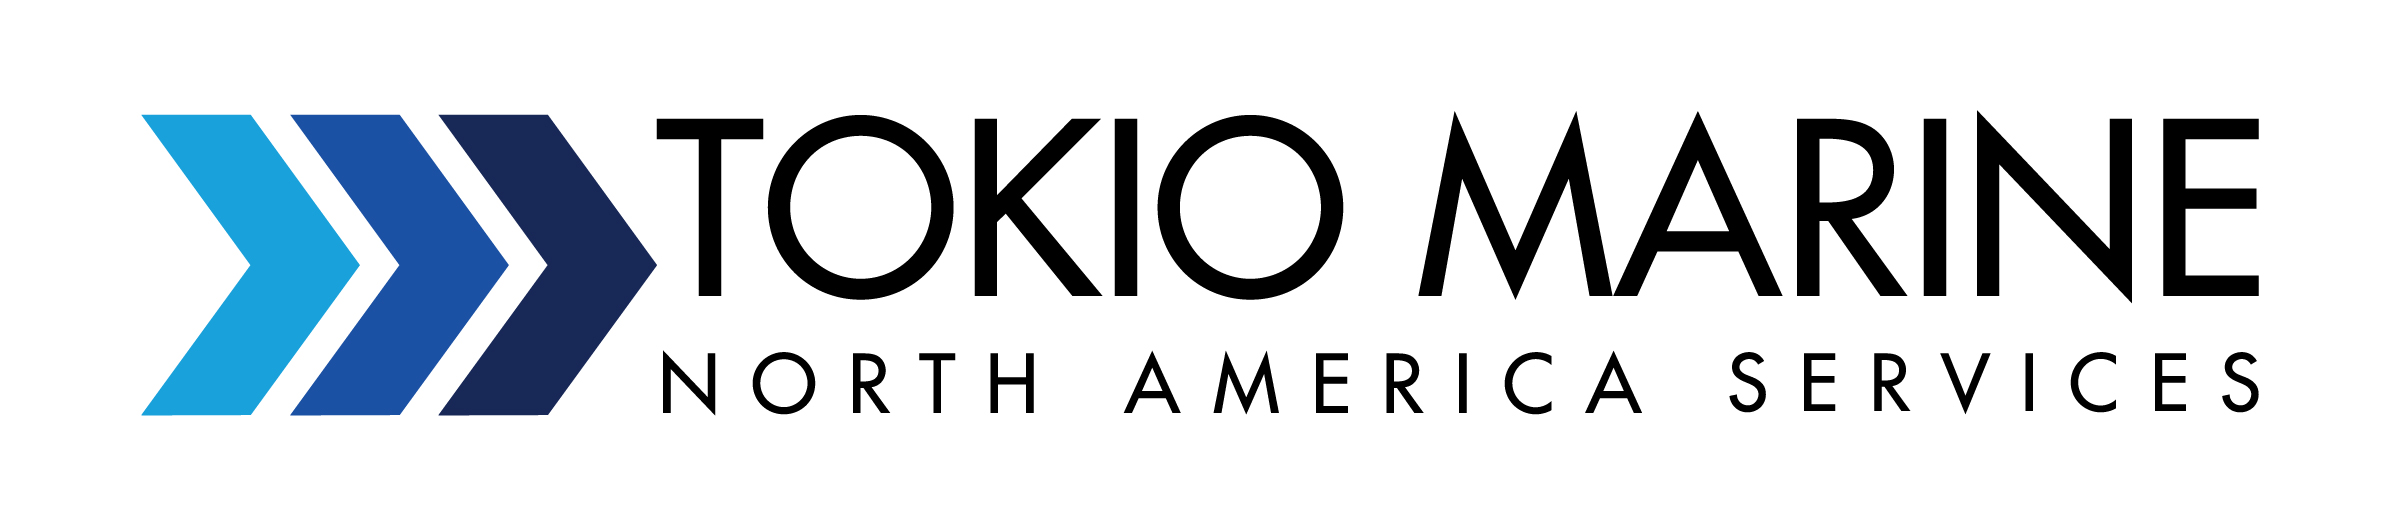 Tokio Marine North America Services logo